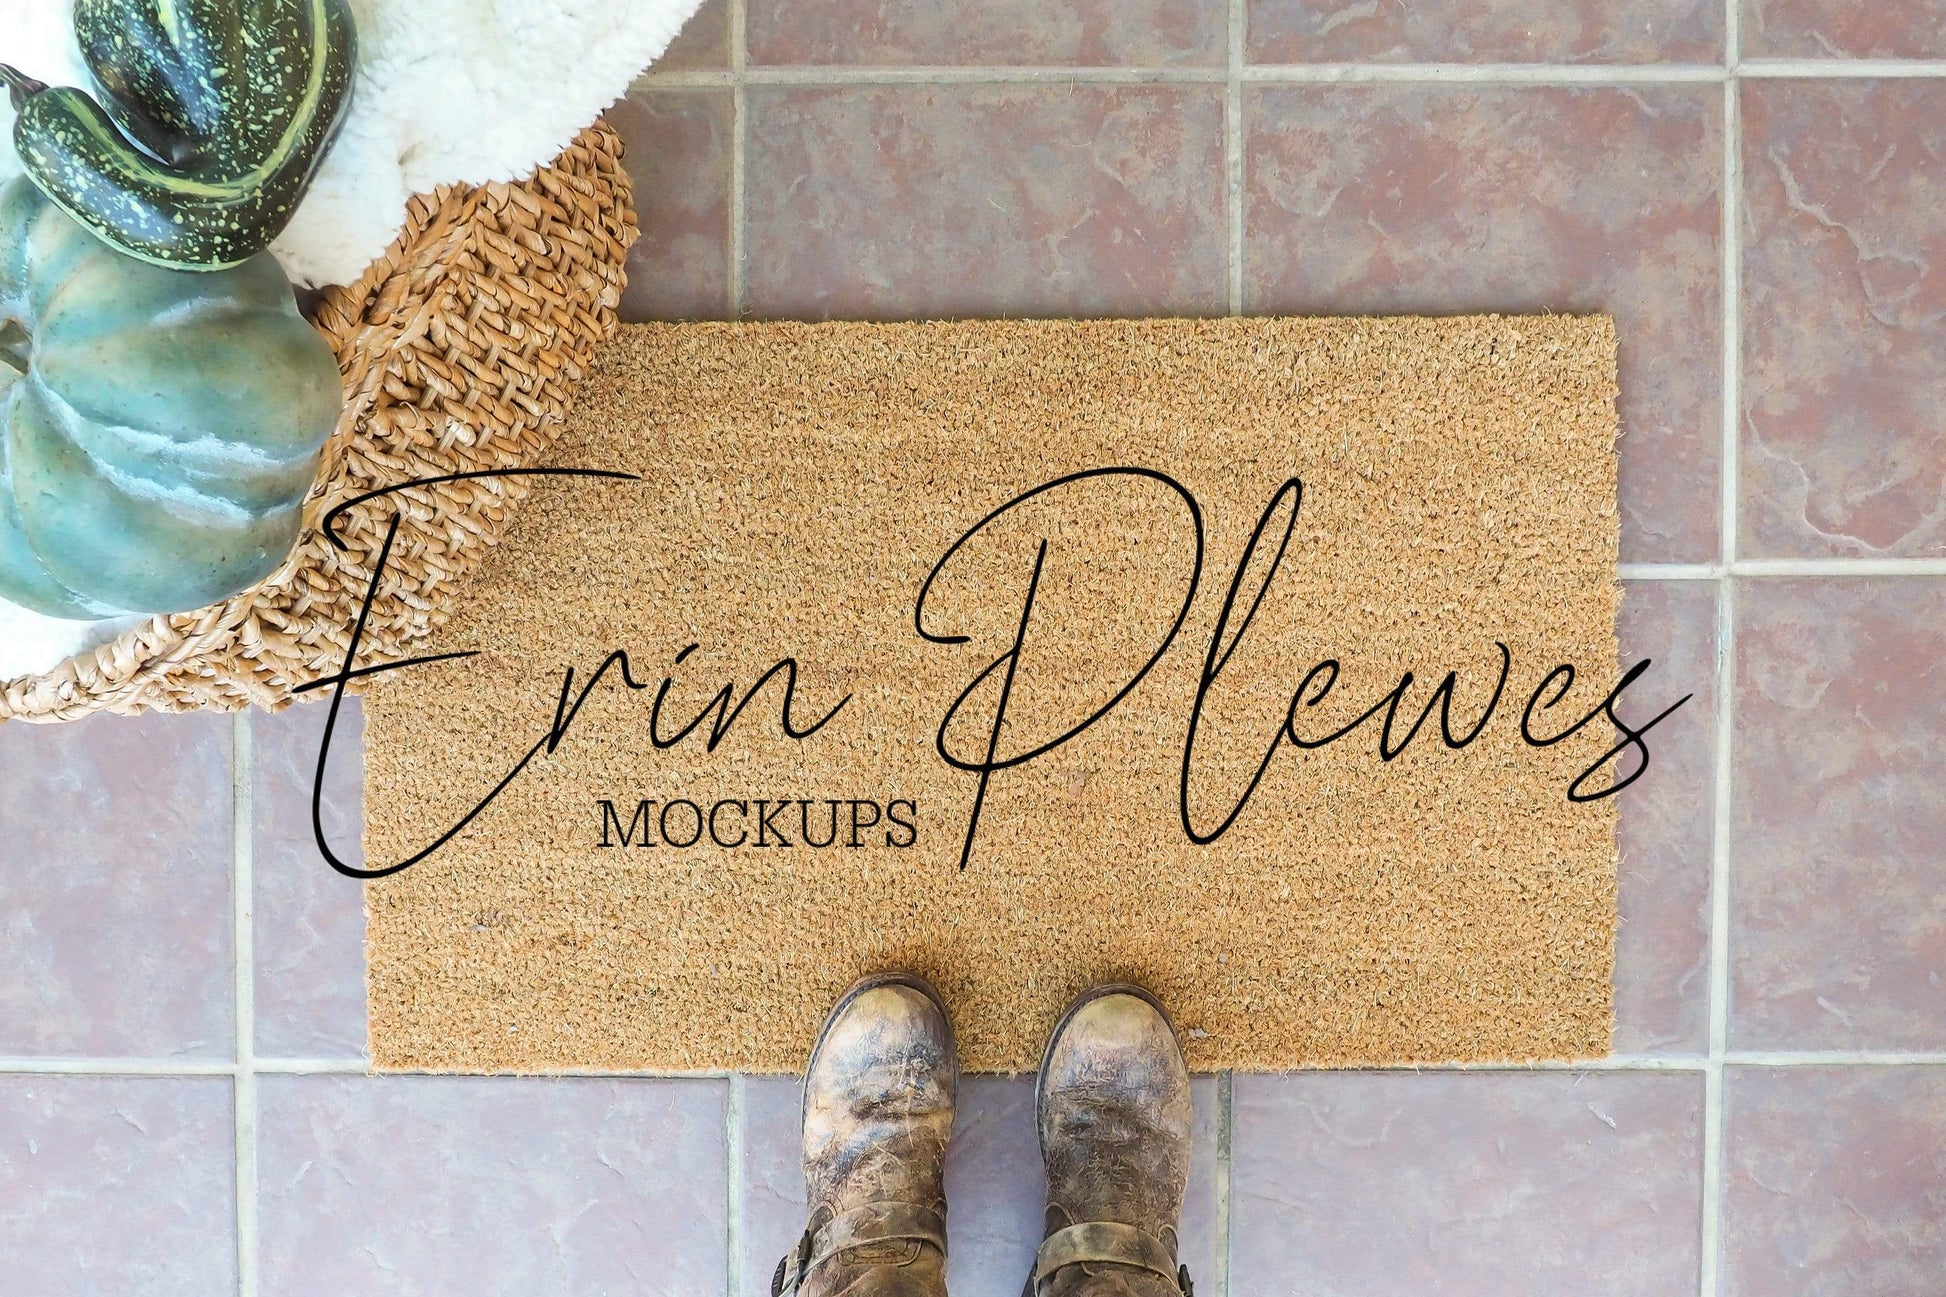 Erin Plewes Mockups Doormat Mockup, Coir Rug Mock up, Farmhouse Style Mock-up, Fall Doormat Flatlay, Instant Digital Download JPEG